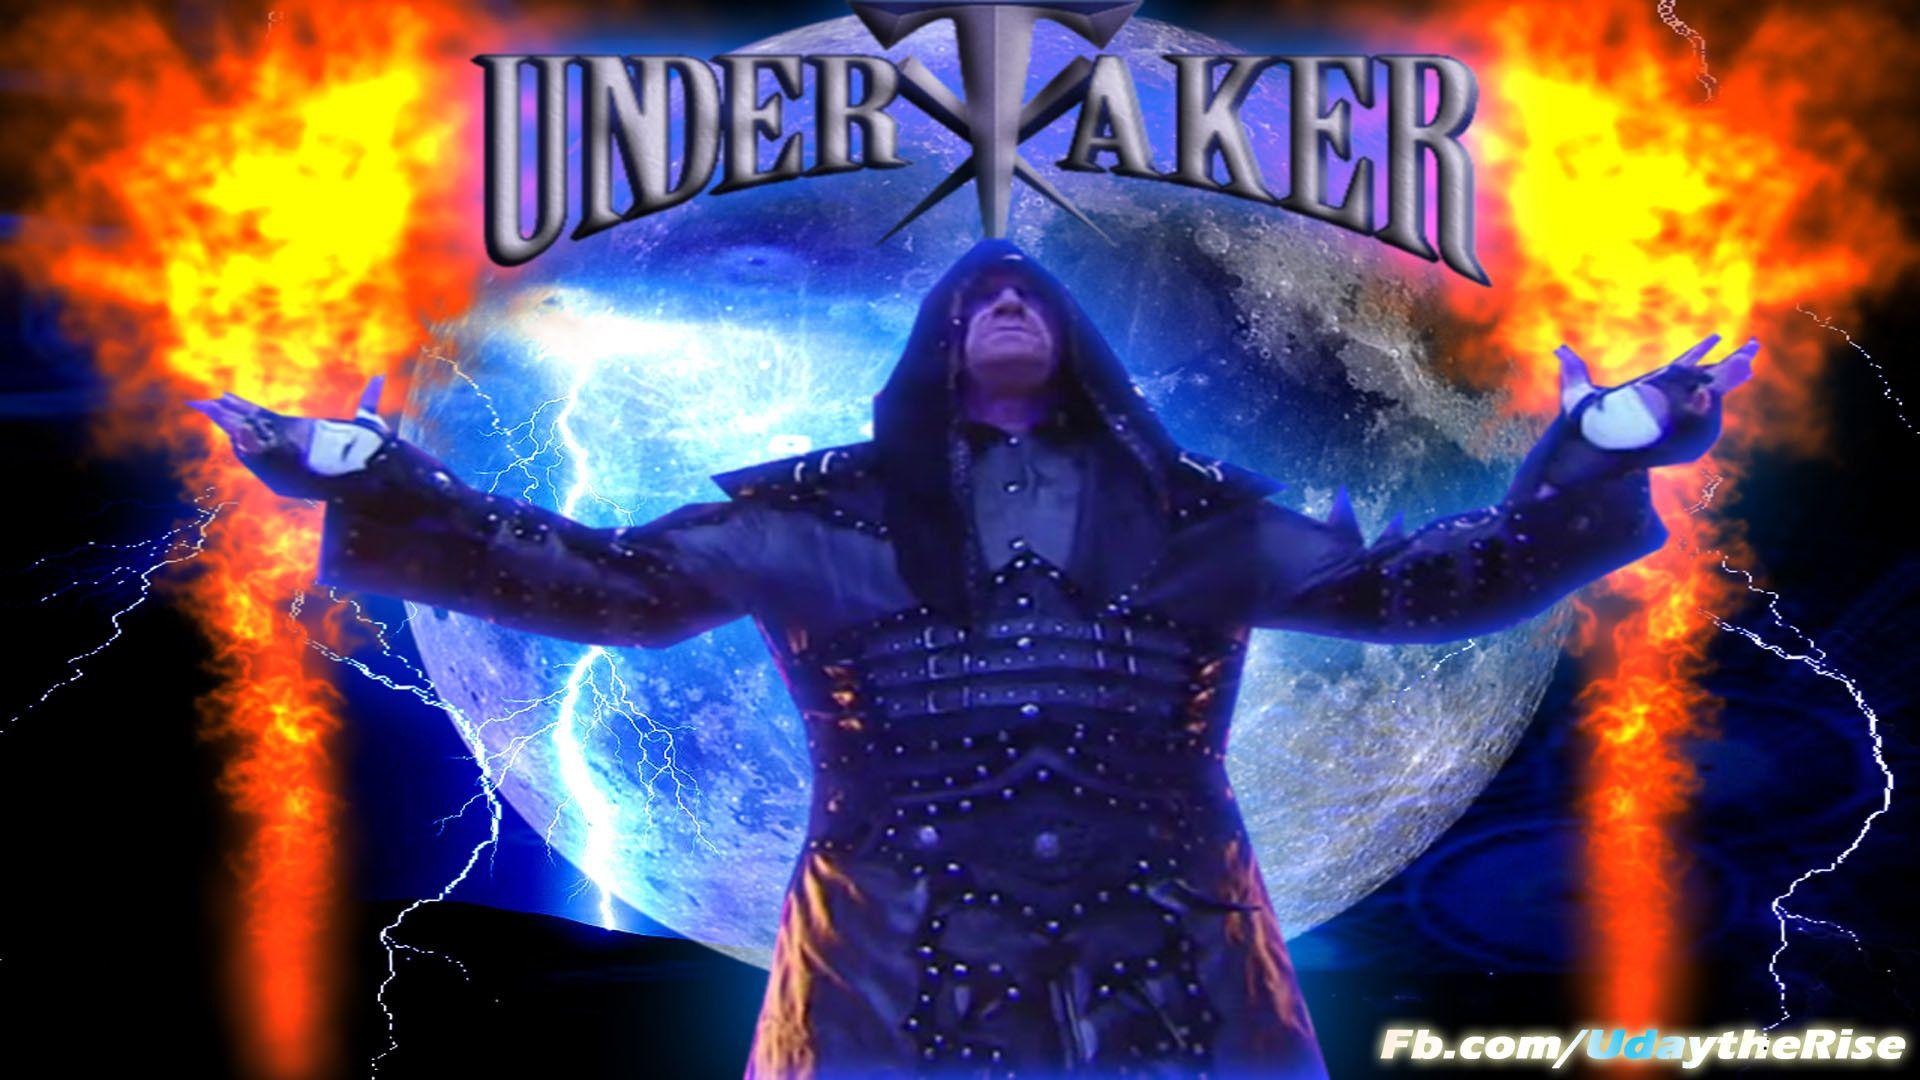 The Undertaker Wallpaper Free The Undertaker